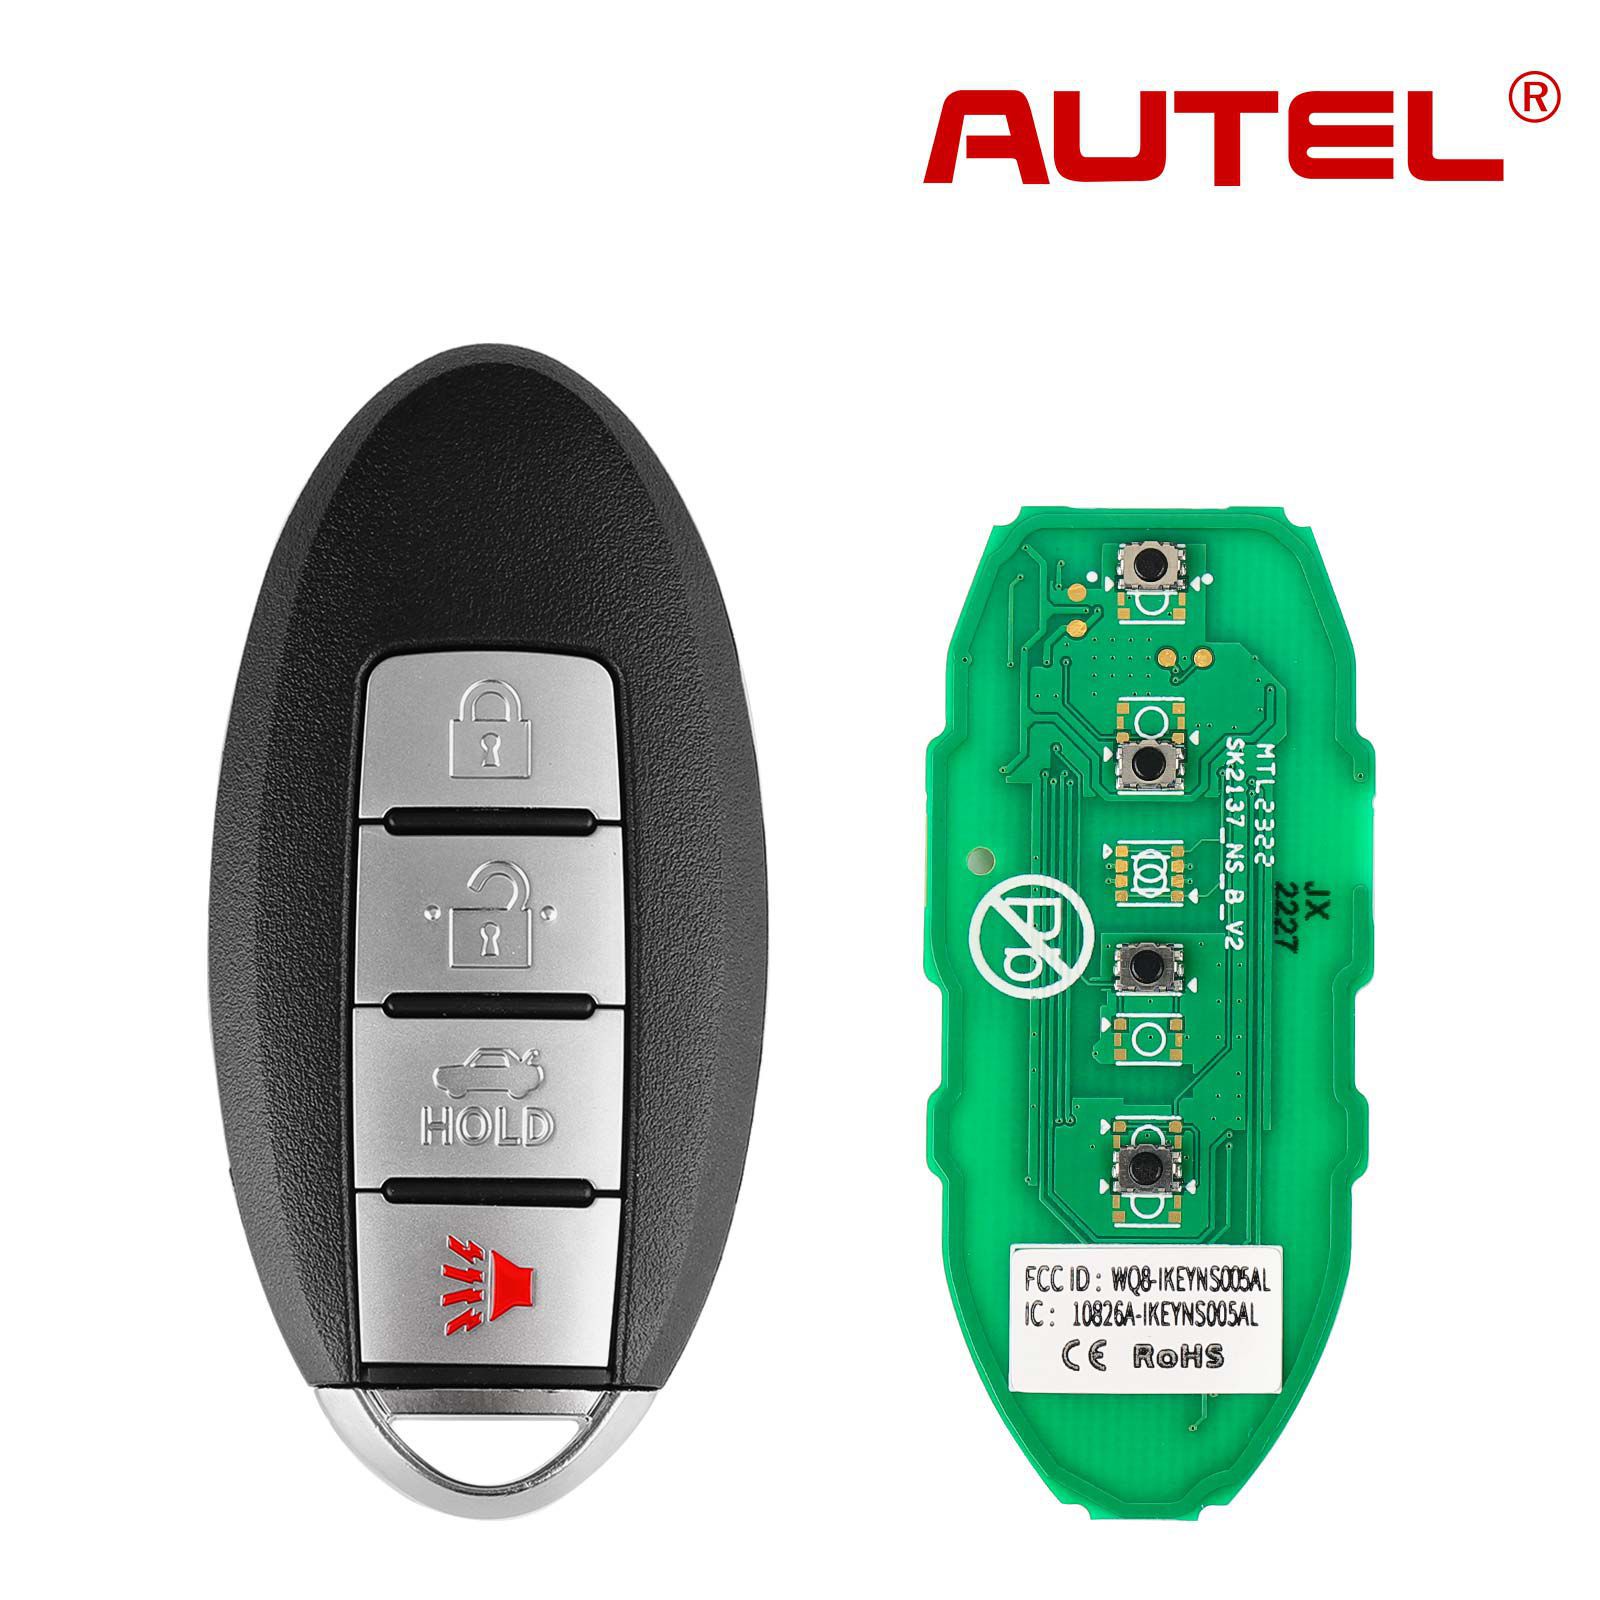 AUTEL IKEYNS004AL Nissan 4 Tasten Universal Smart Key 5pcs/lot